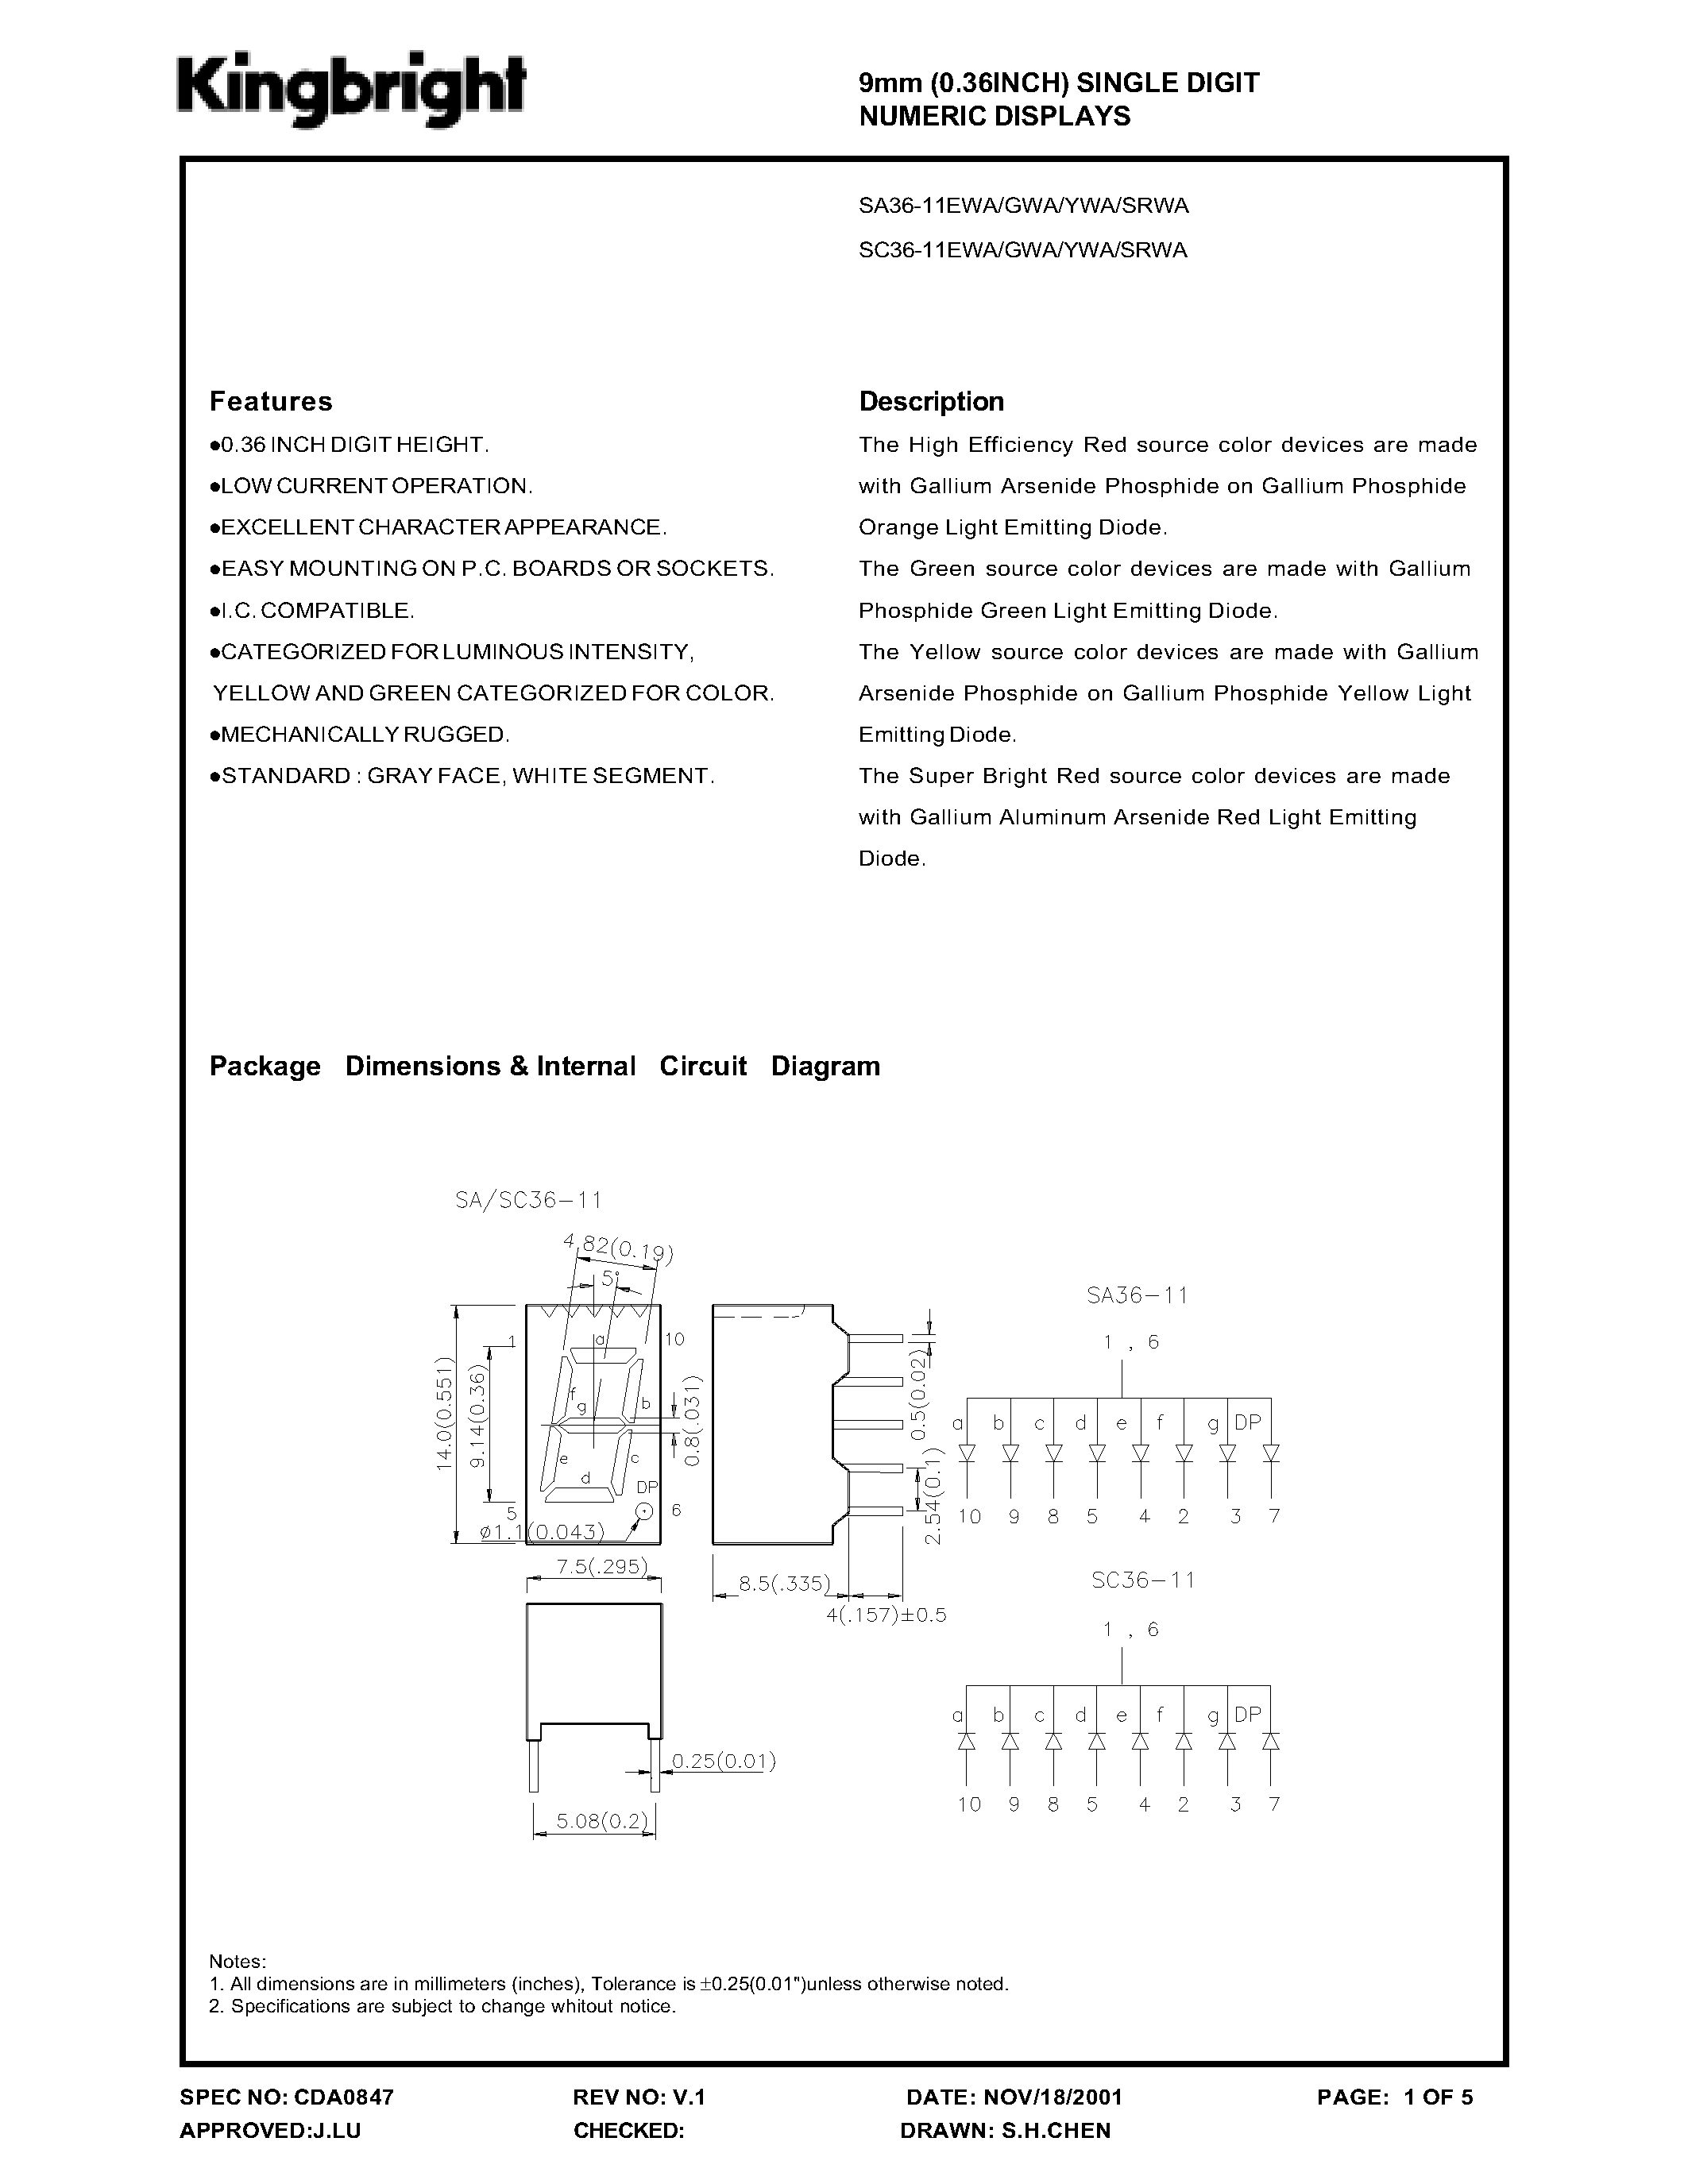 Datasheet SA36-11GWA - 9mm(0.36INCH) SINGLE DIGIT NUMERIC DISPLAYS page 1